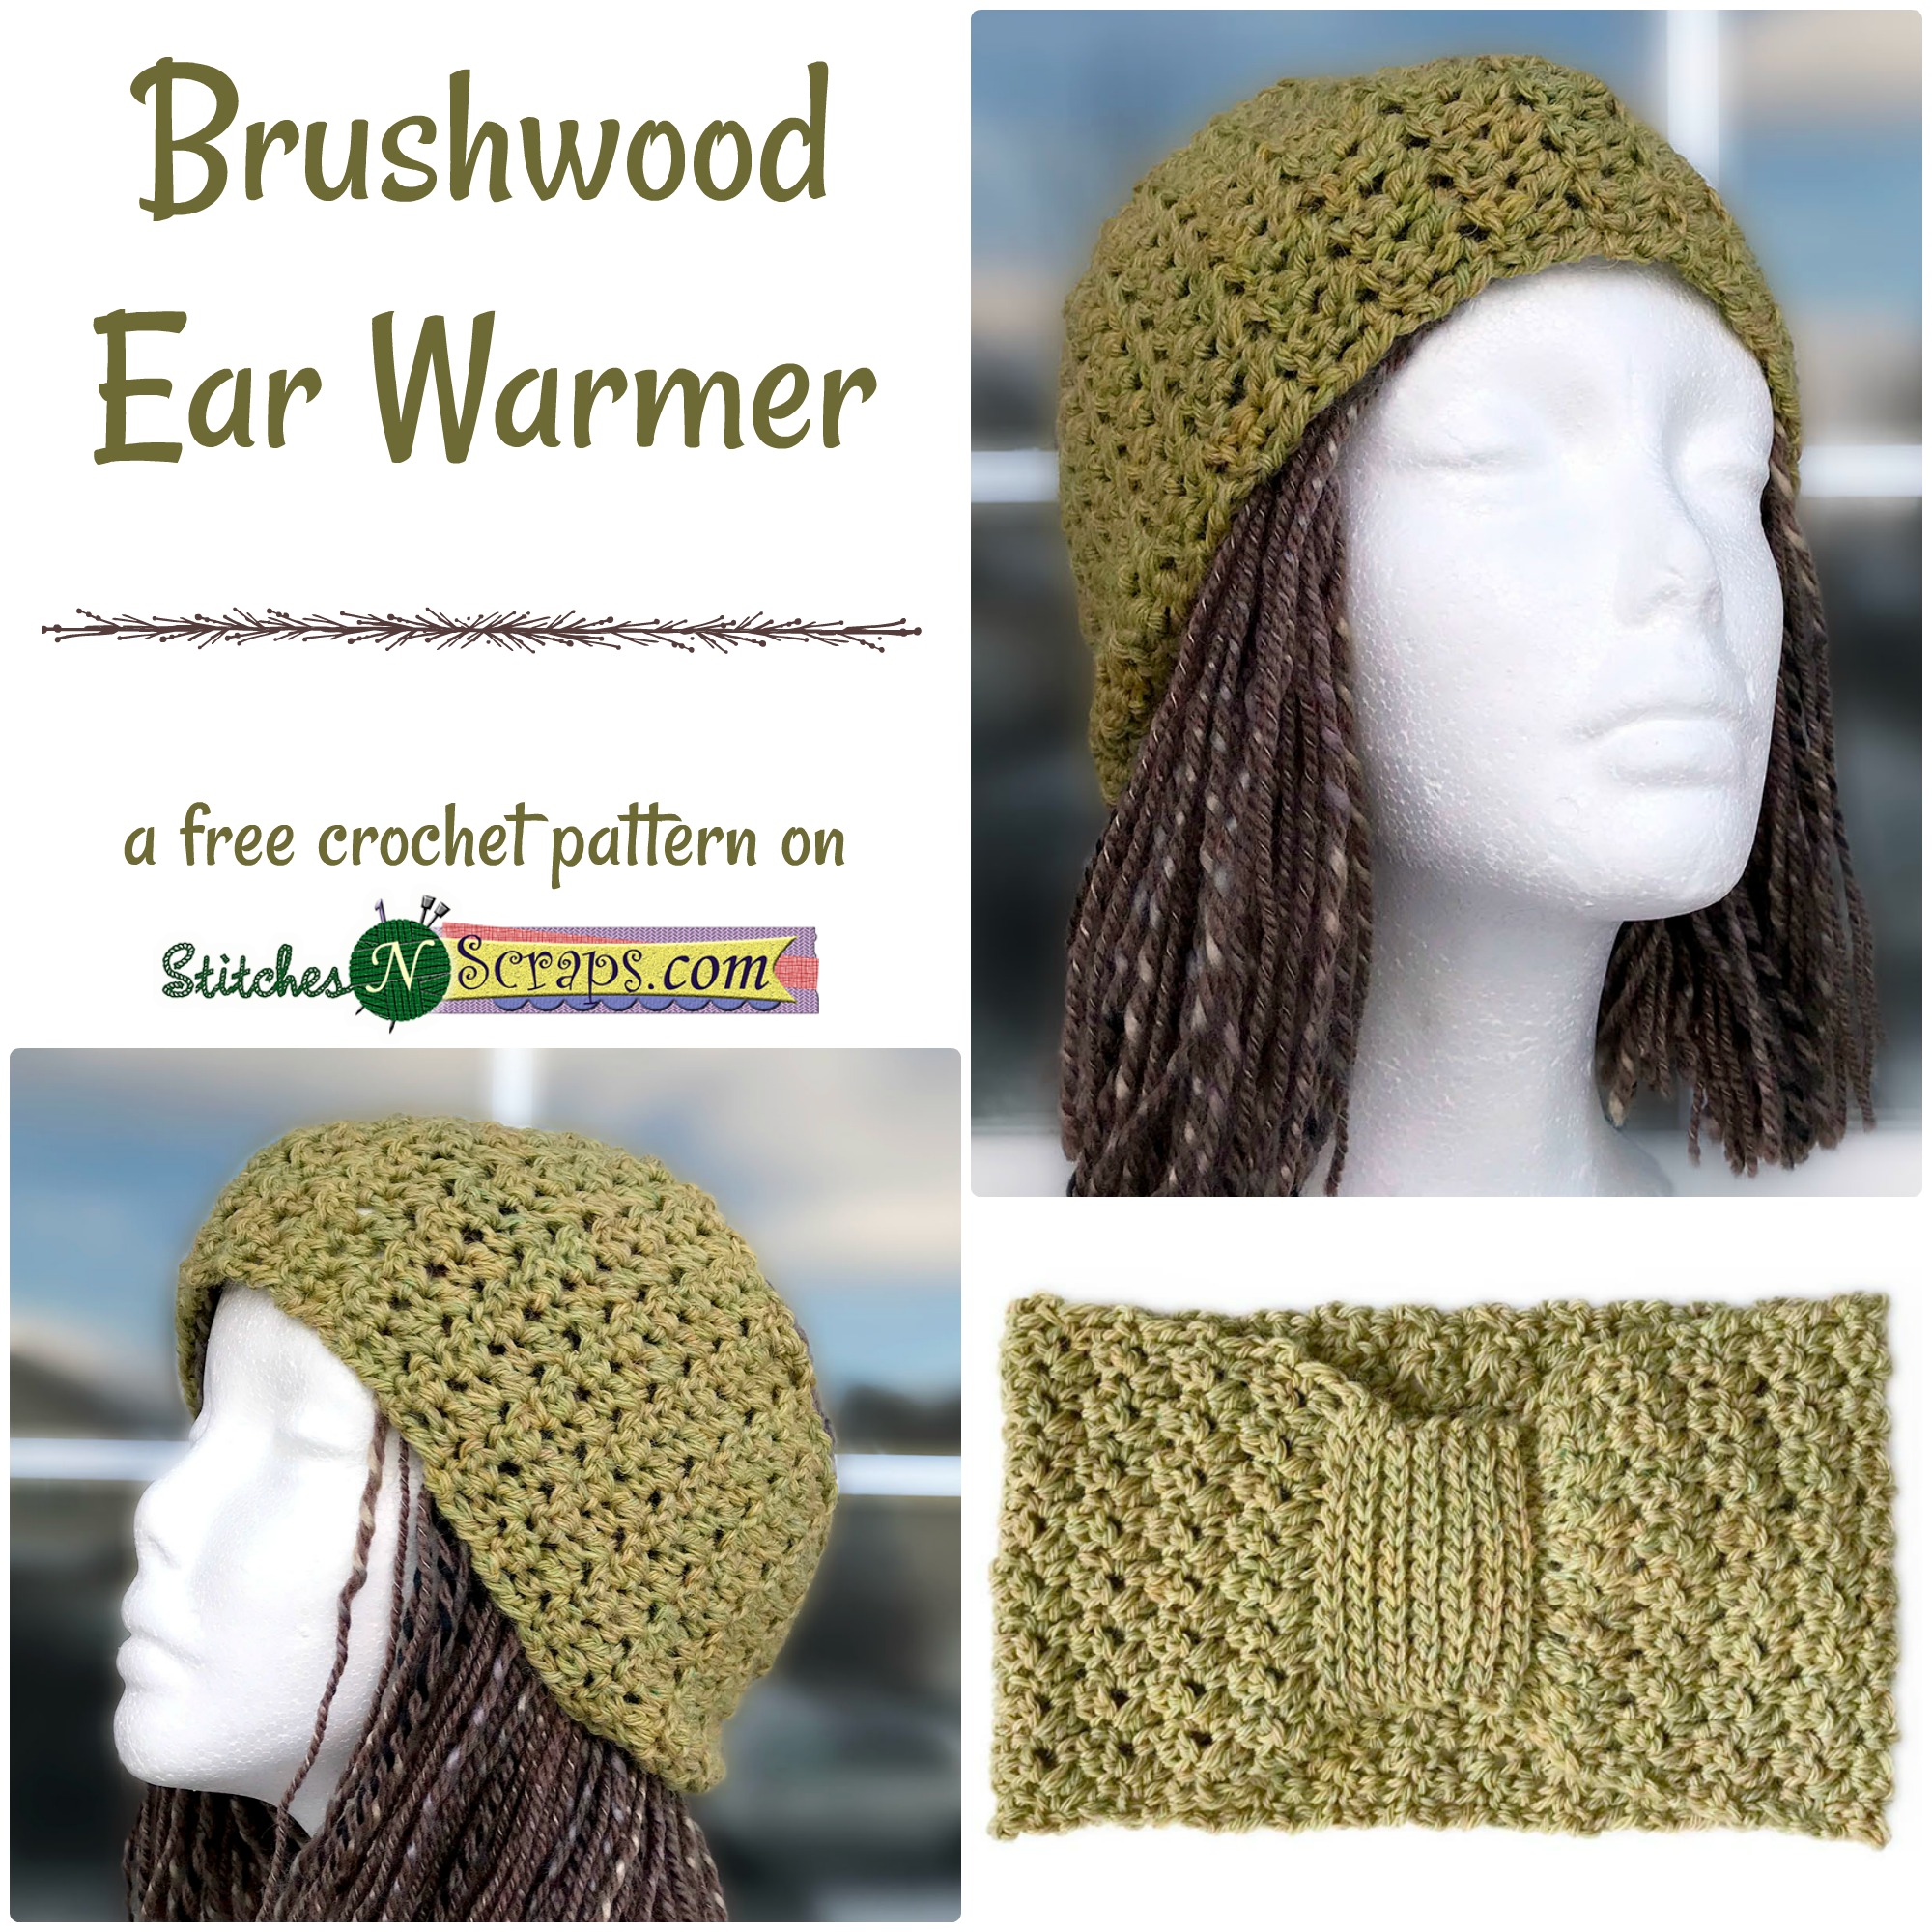 Brushwood Earwarmer - a free crochet pattern on StitchesNScraps.com